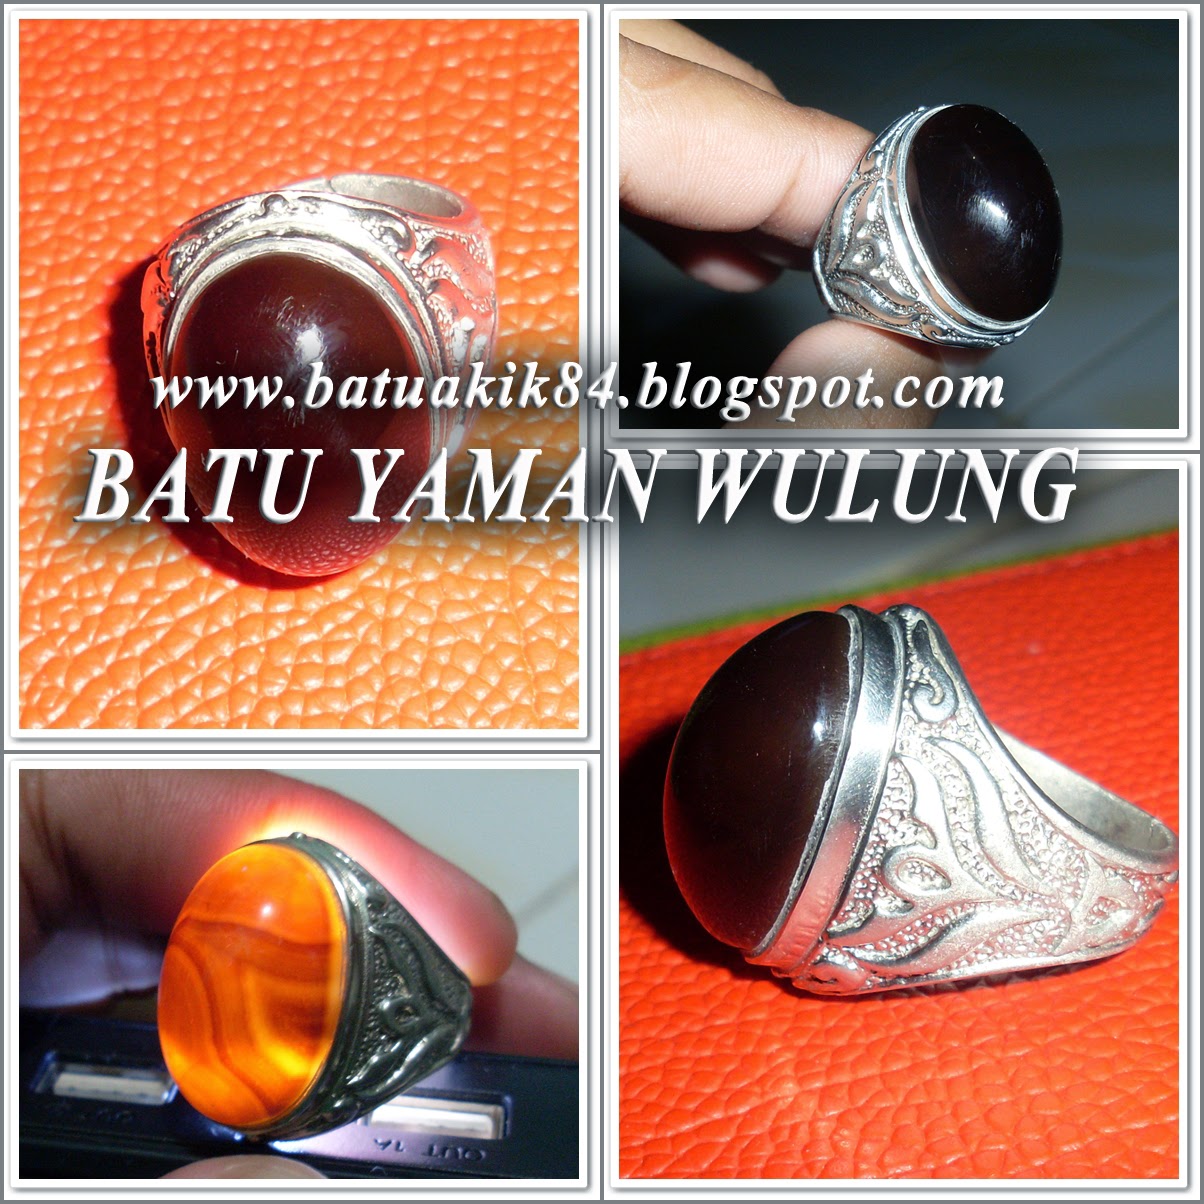 http://batuakik84.blogspot.com/2014/11/batu-yaman-wulung.html